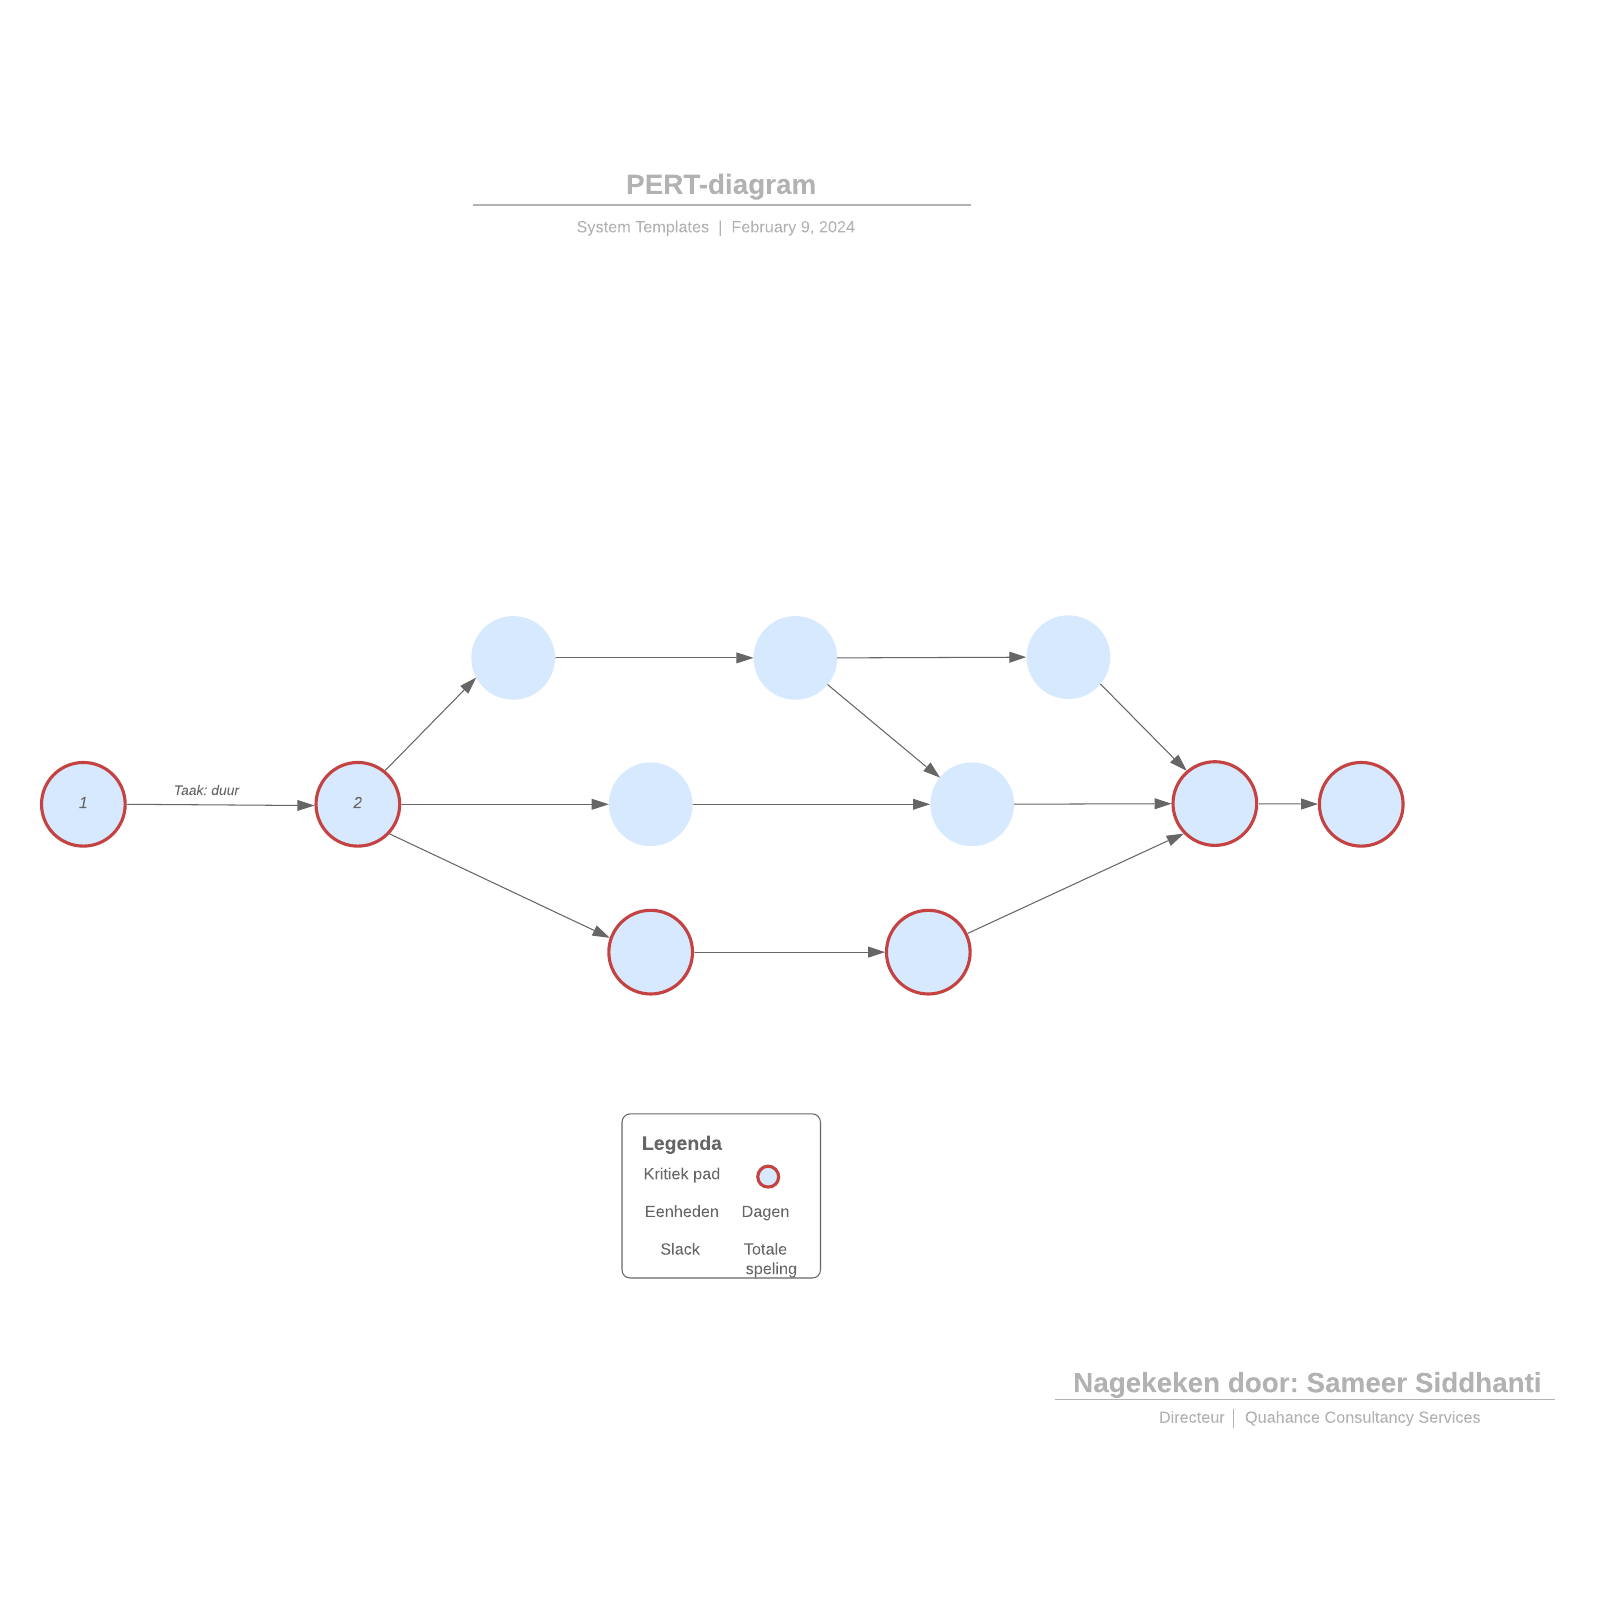 PERT-diagram example